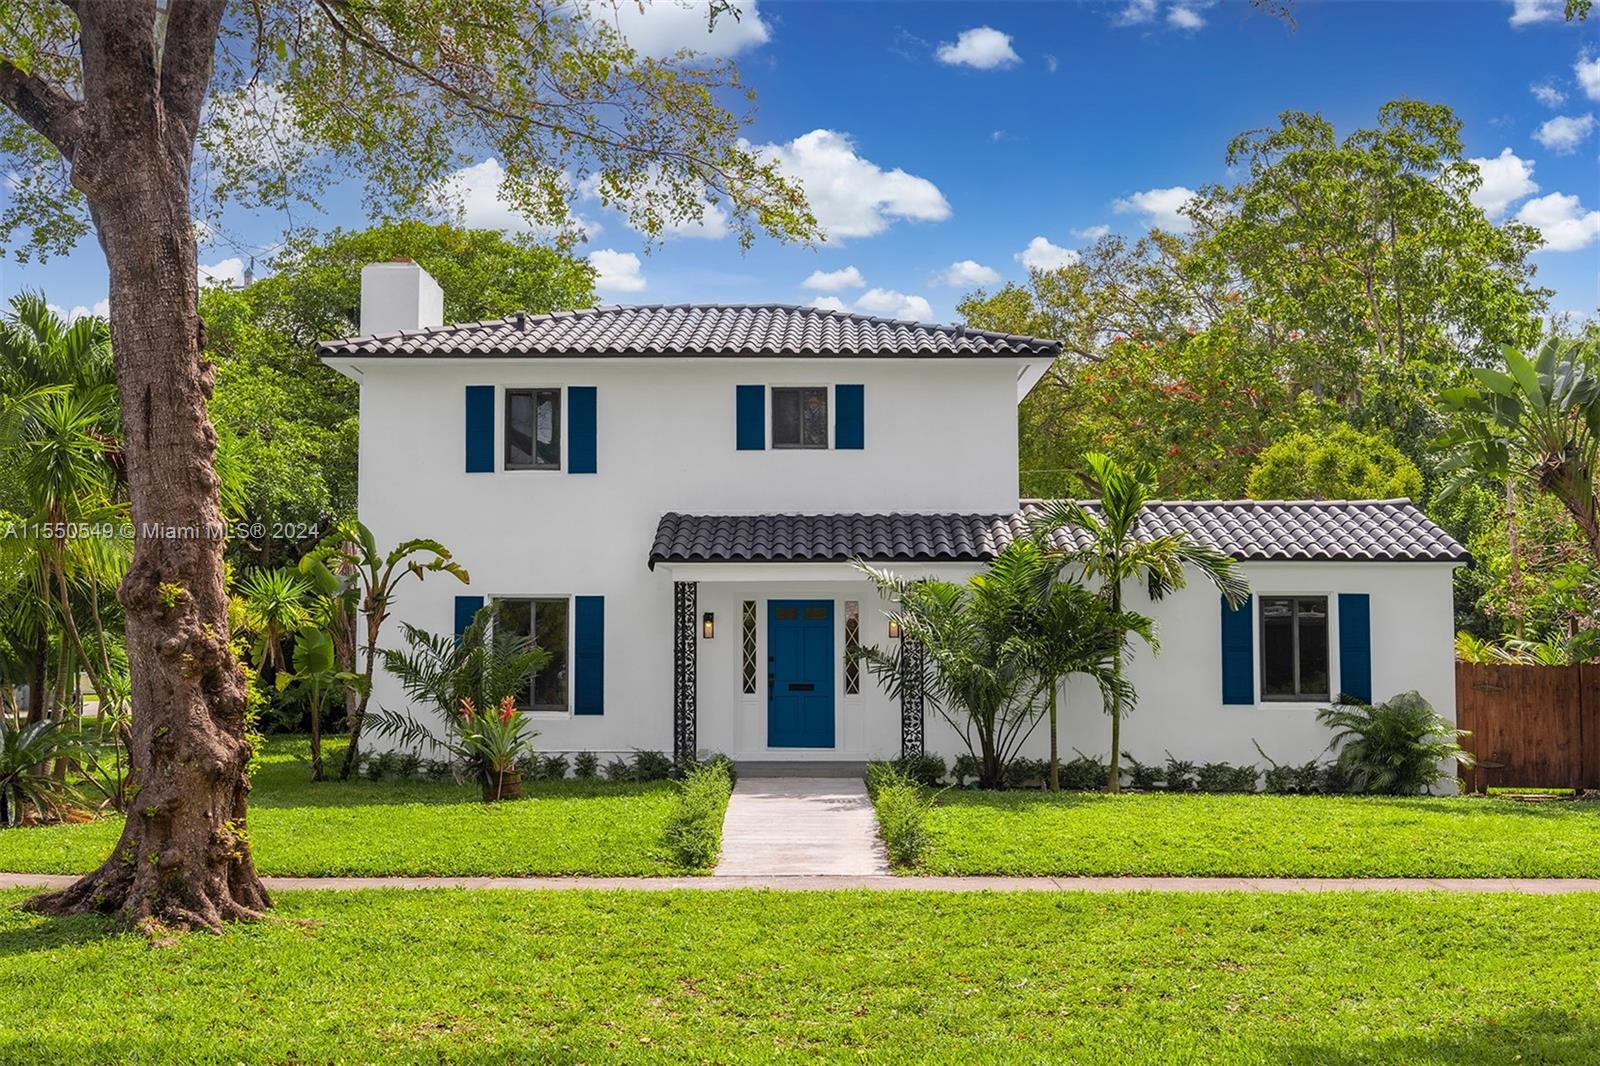 Property for Sale at 390 Ne 93rd St, Miami Shores, Miami-Dade County, Florida - Bedrooms: 4 
Bathrooms: 5  - $2,750,000